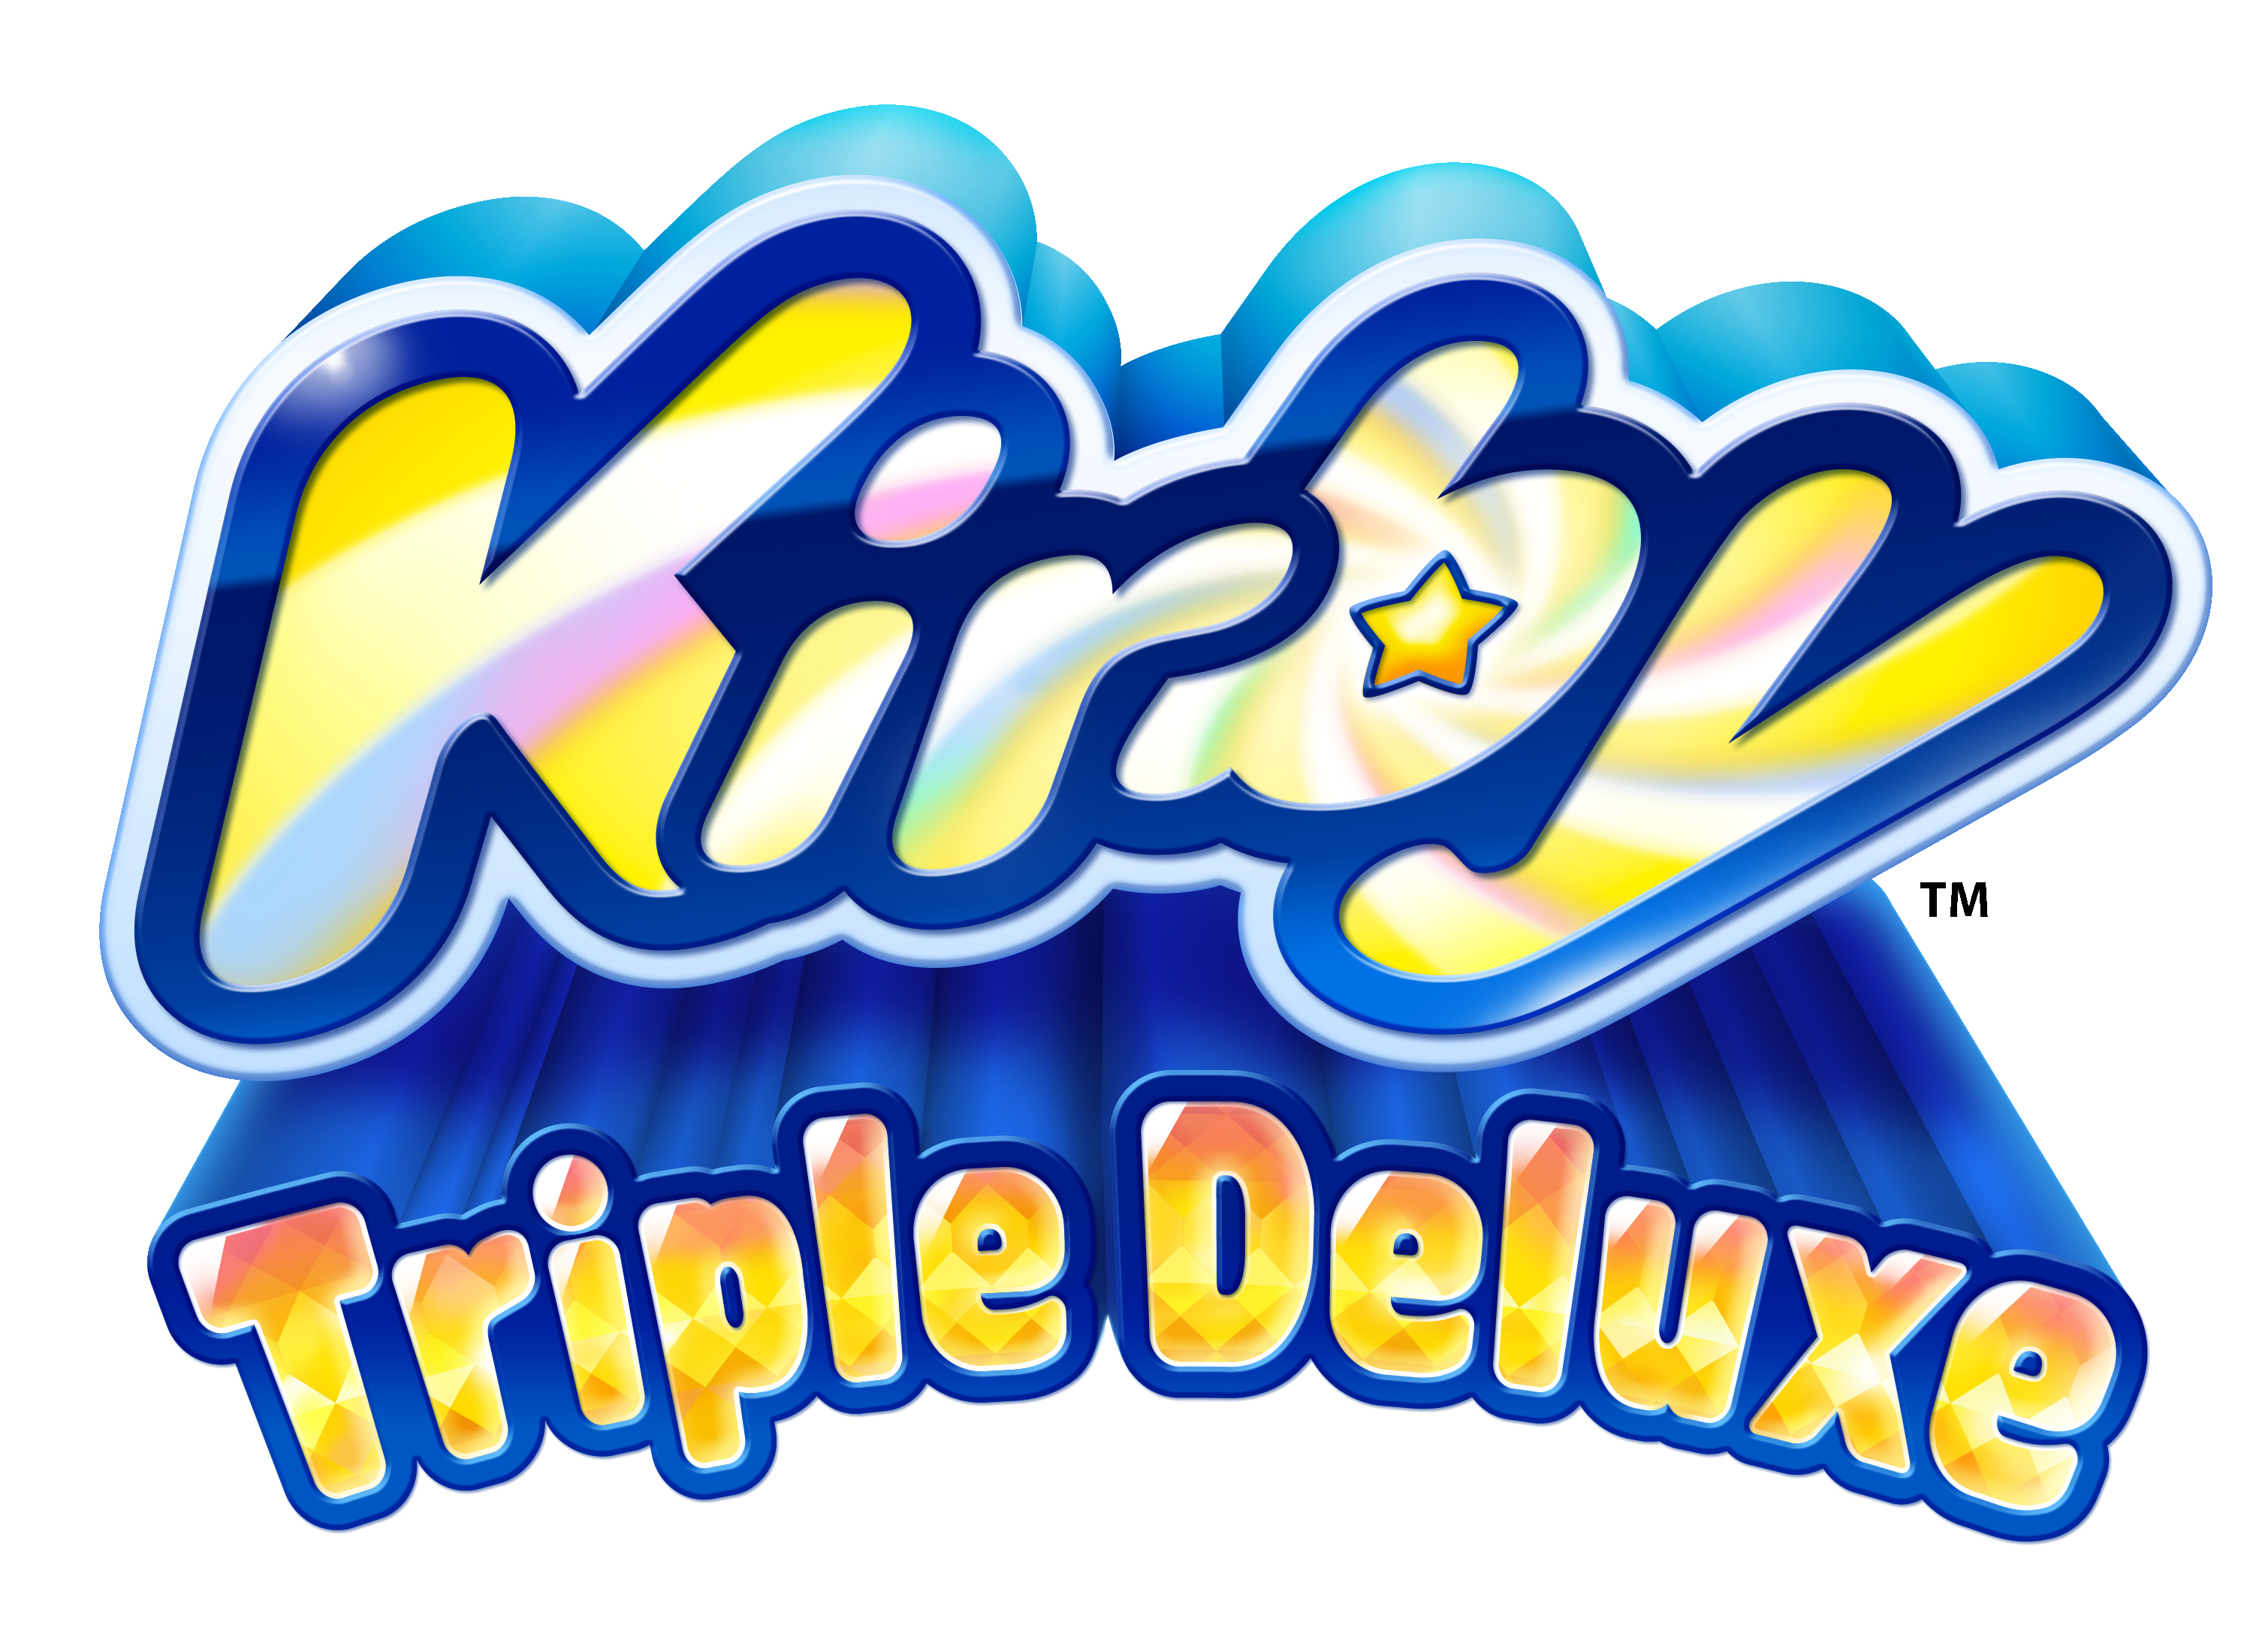 Japanese Kirby Triple Deluxe trailer